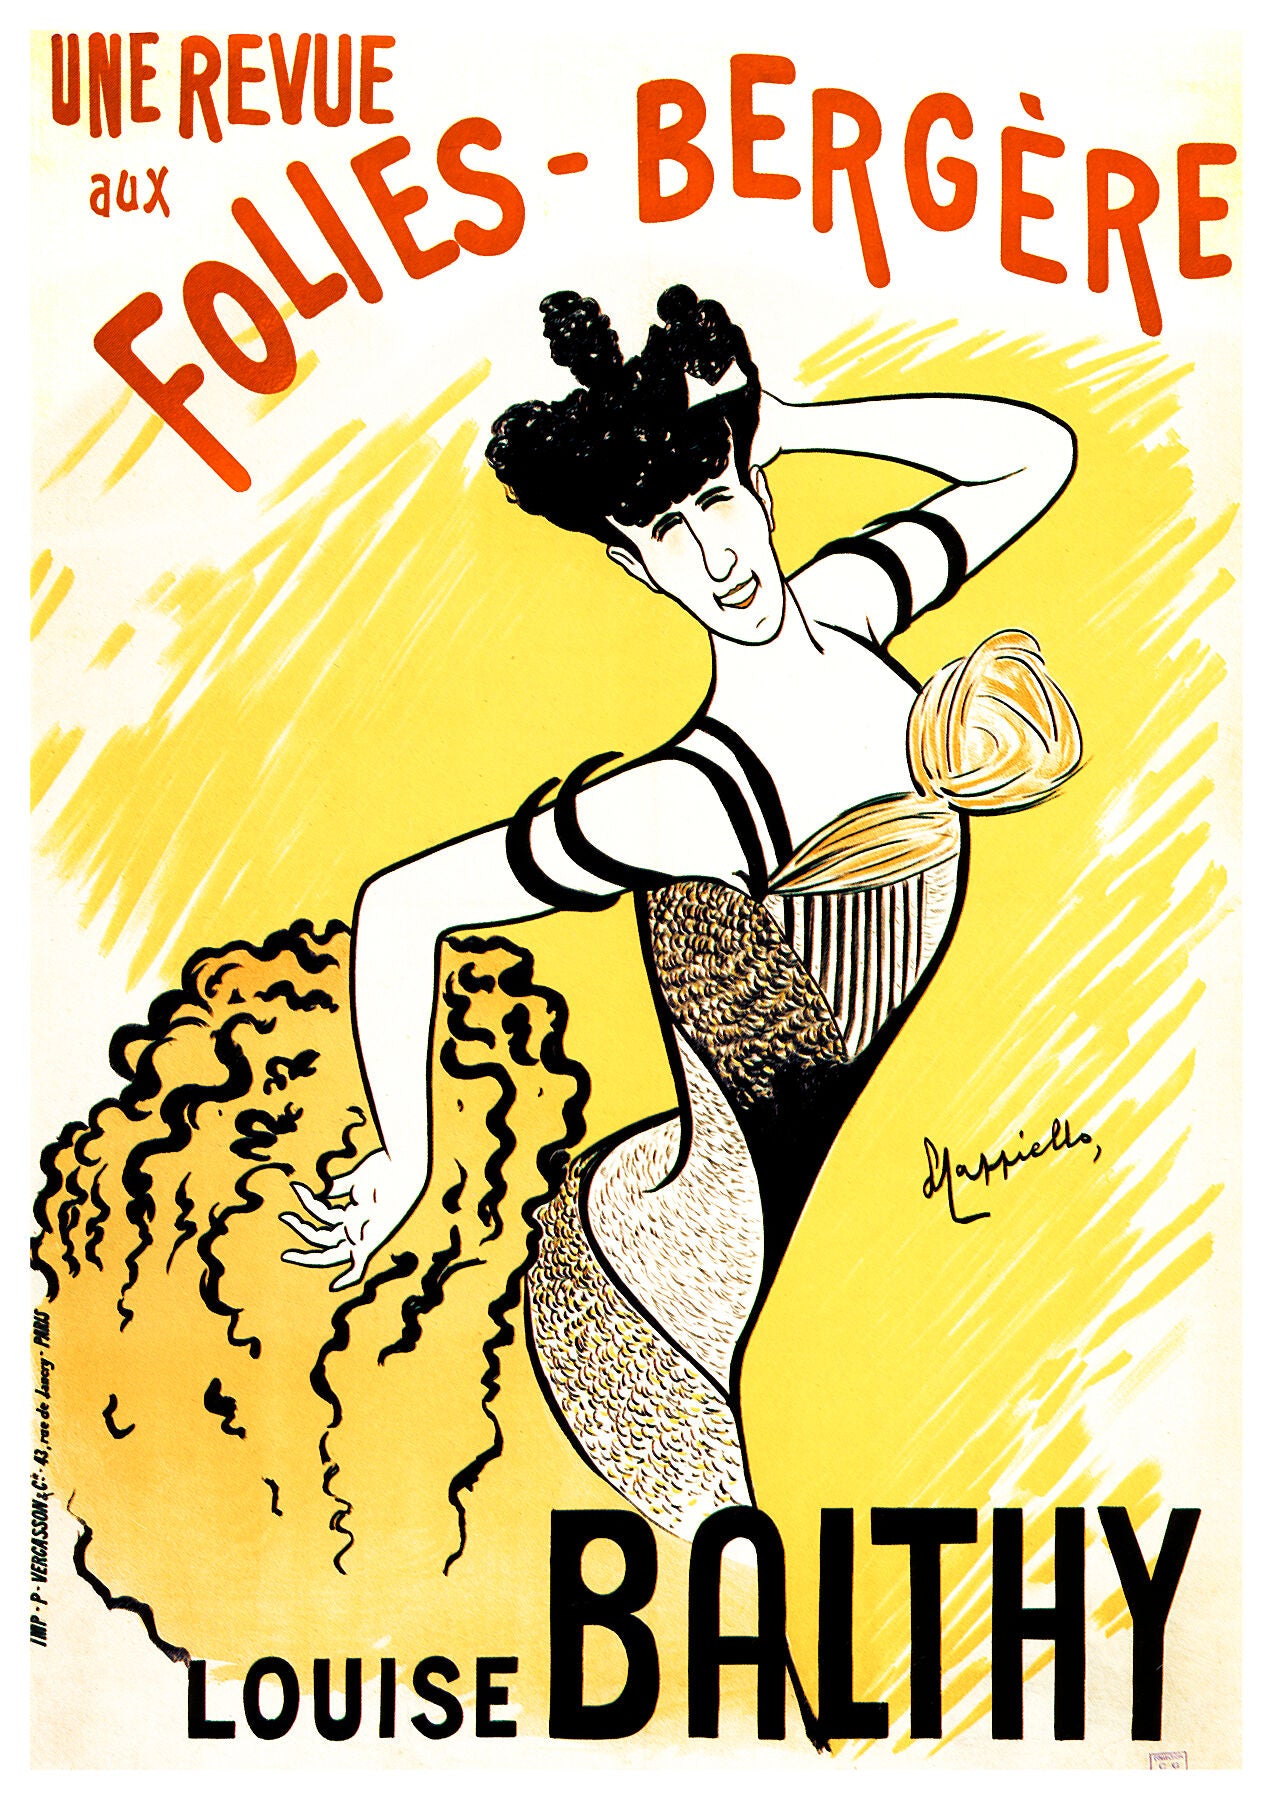 Une Revue aux Folies-Bergère poster by Leonetto Cappiello